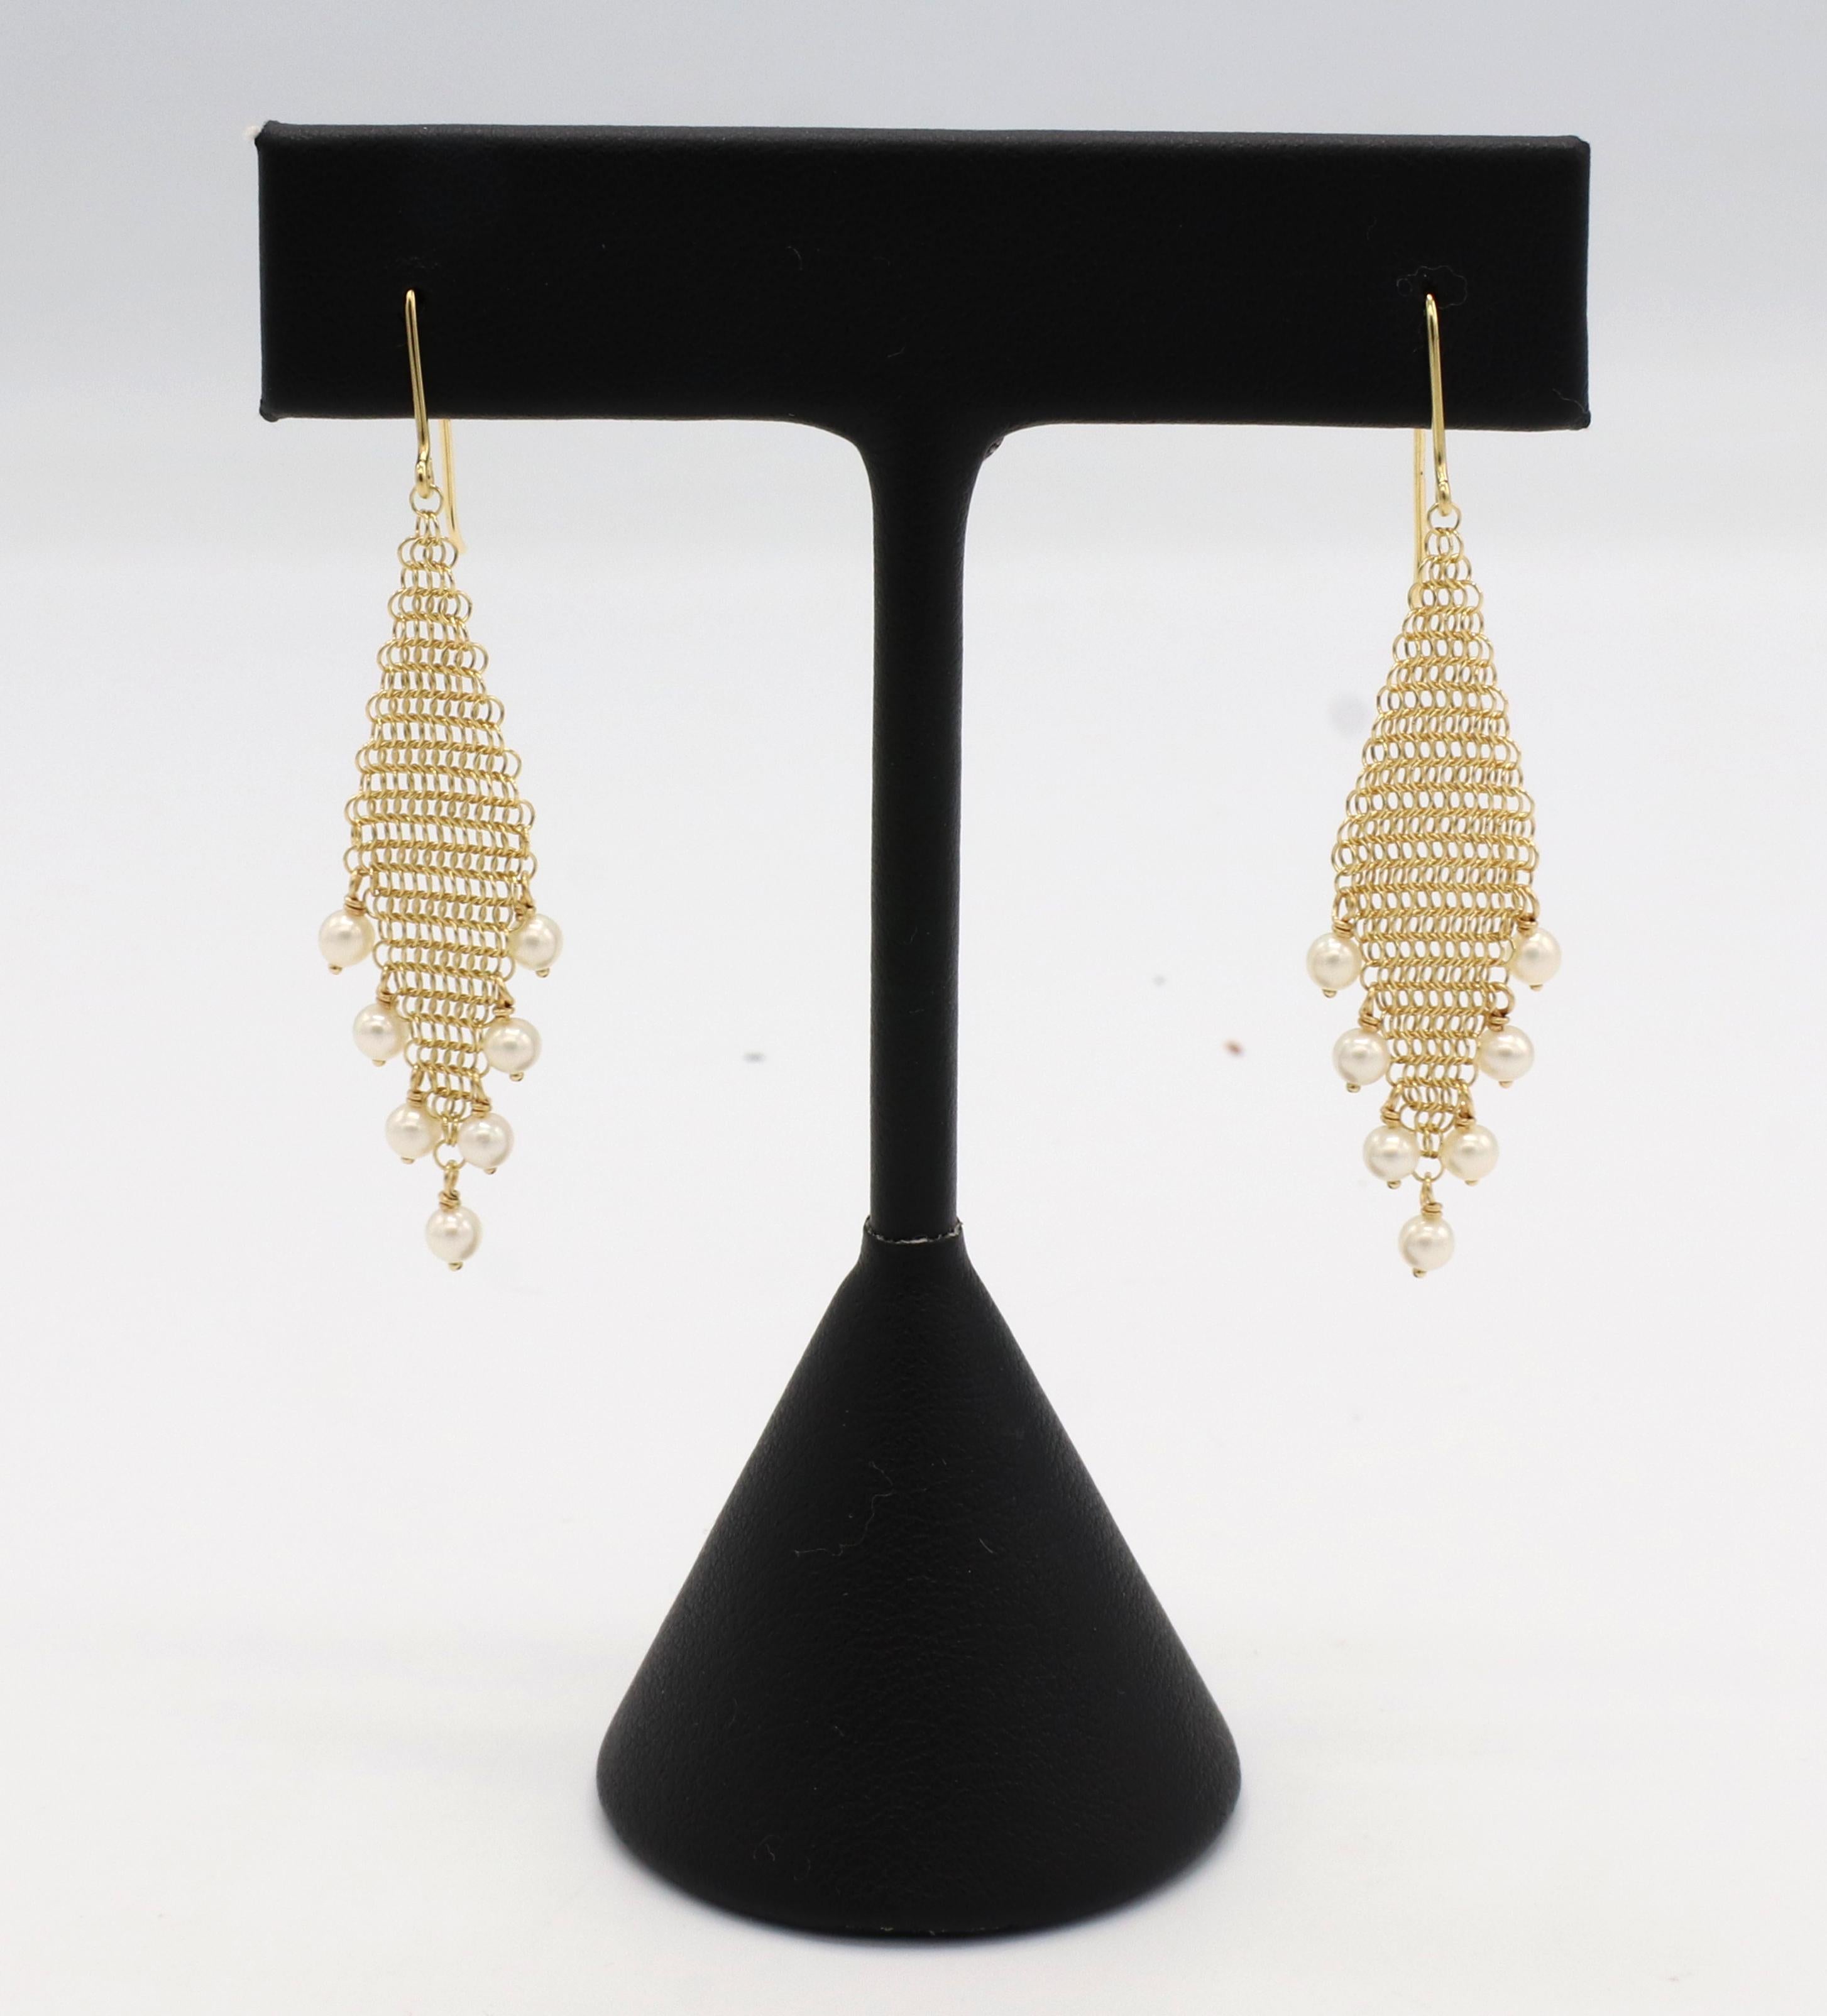 Tiffany & Co. Elsa Peretti 18 Karat Yellow Gold Pearl Mesh Fringe Drop Earrings
Metal: 18k yellow gold
Weight: 2.48 grams
Length: 40mm
Width:14mm
Pearls: 2.5-3mm
Retail: $1,050 USD

